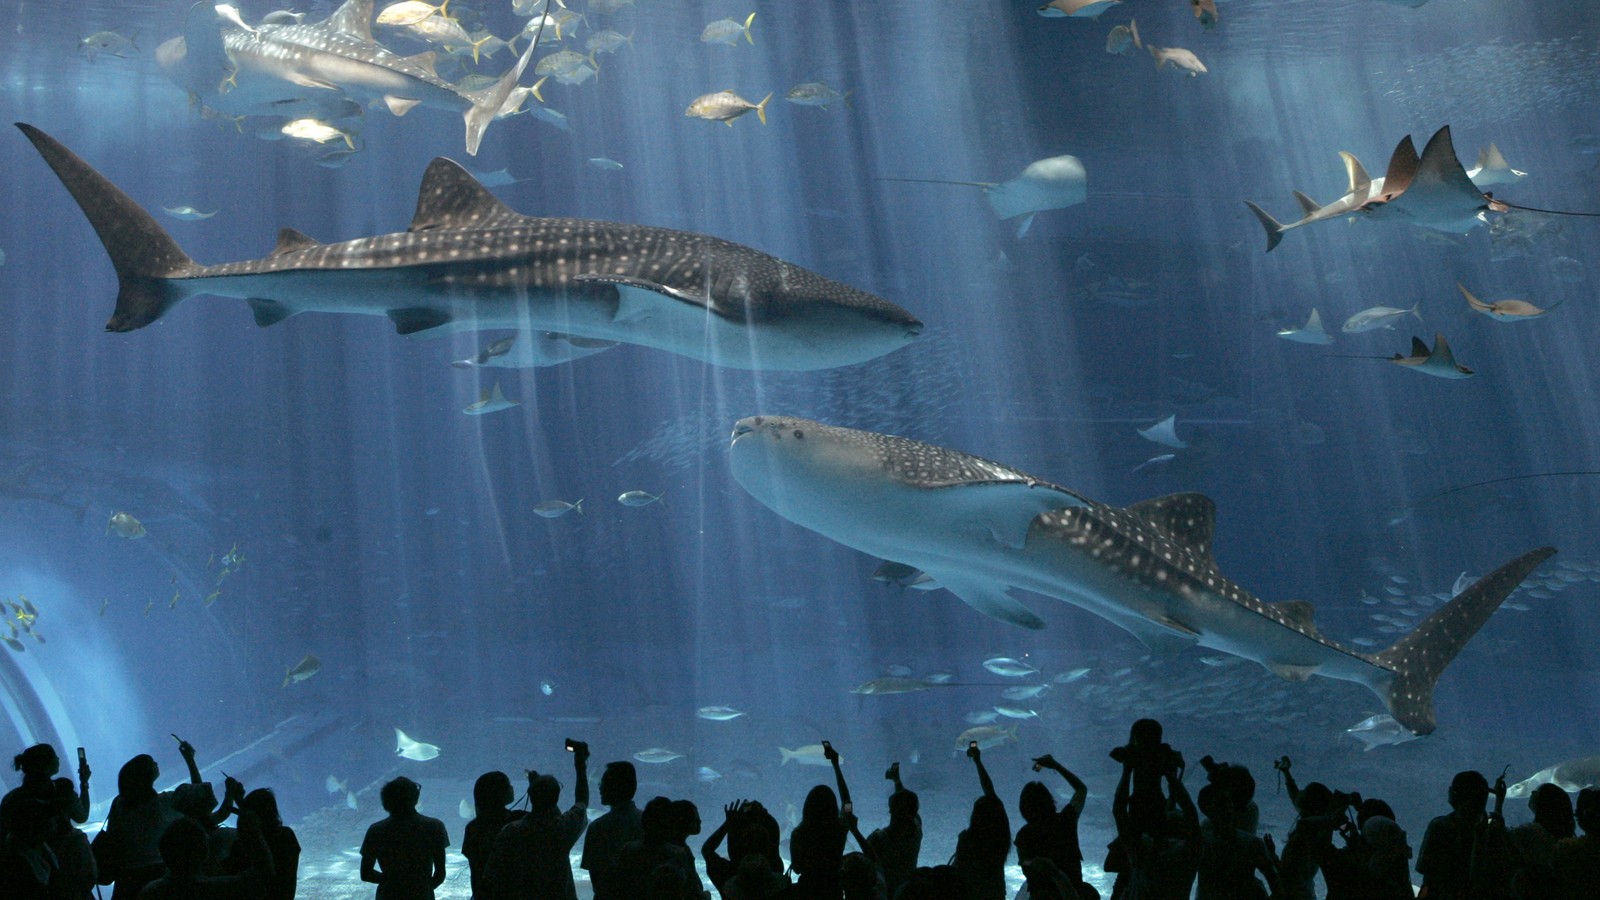 New Aquariums Struggle to Succeed - The Atlantic